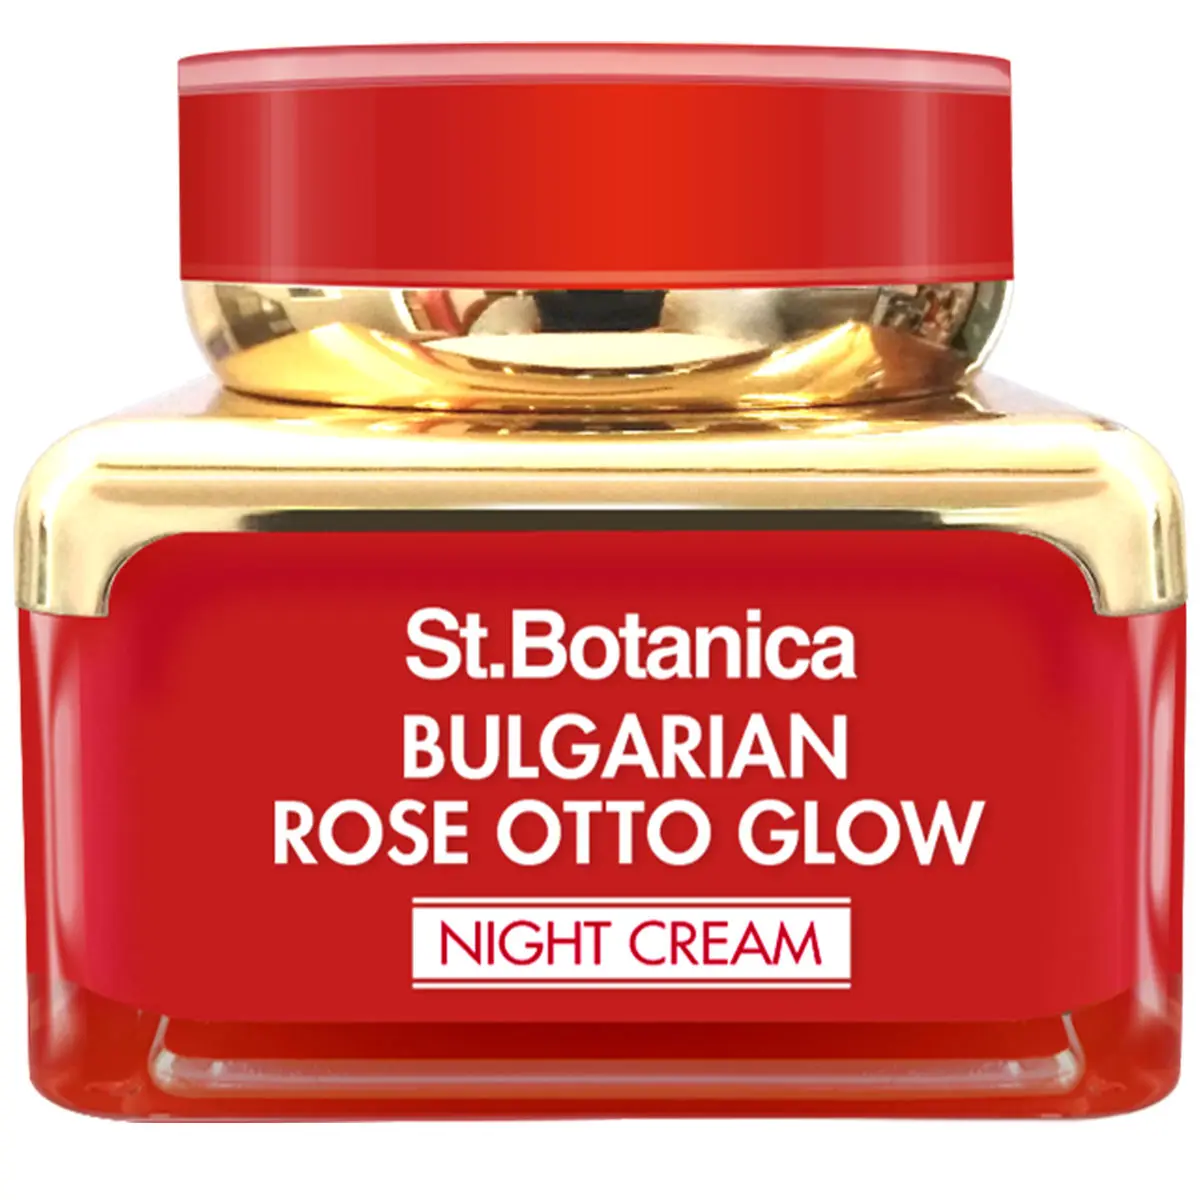 StBotanica Bulgarian Rose Otto Glow Night Cream 50g